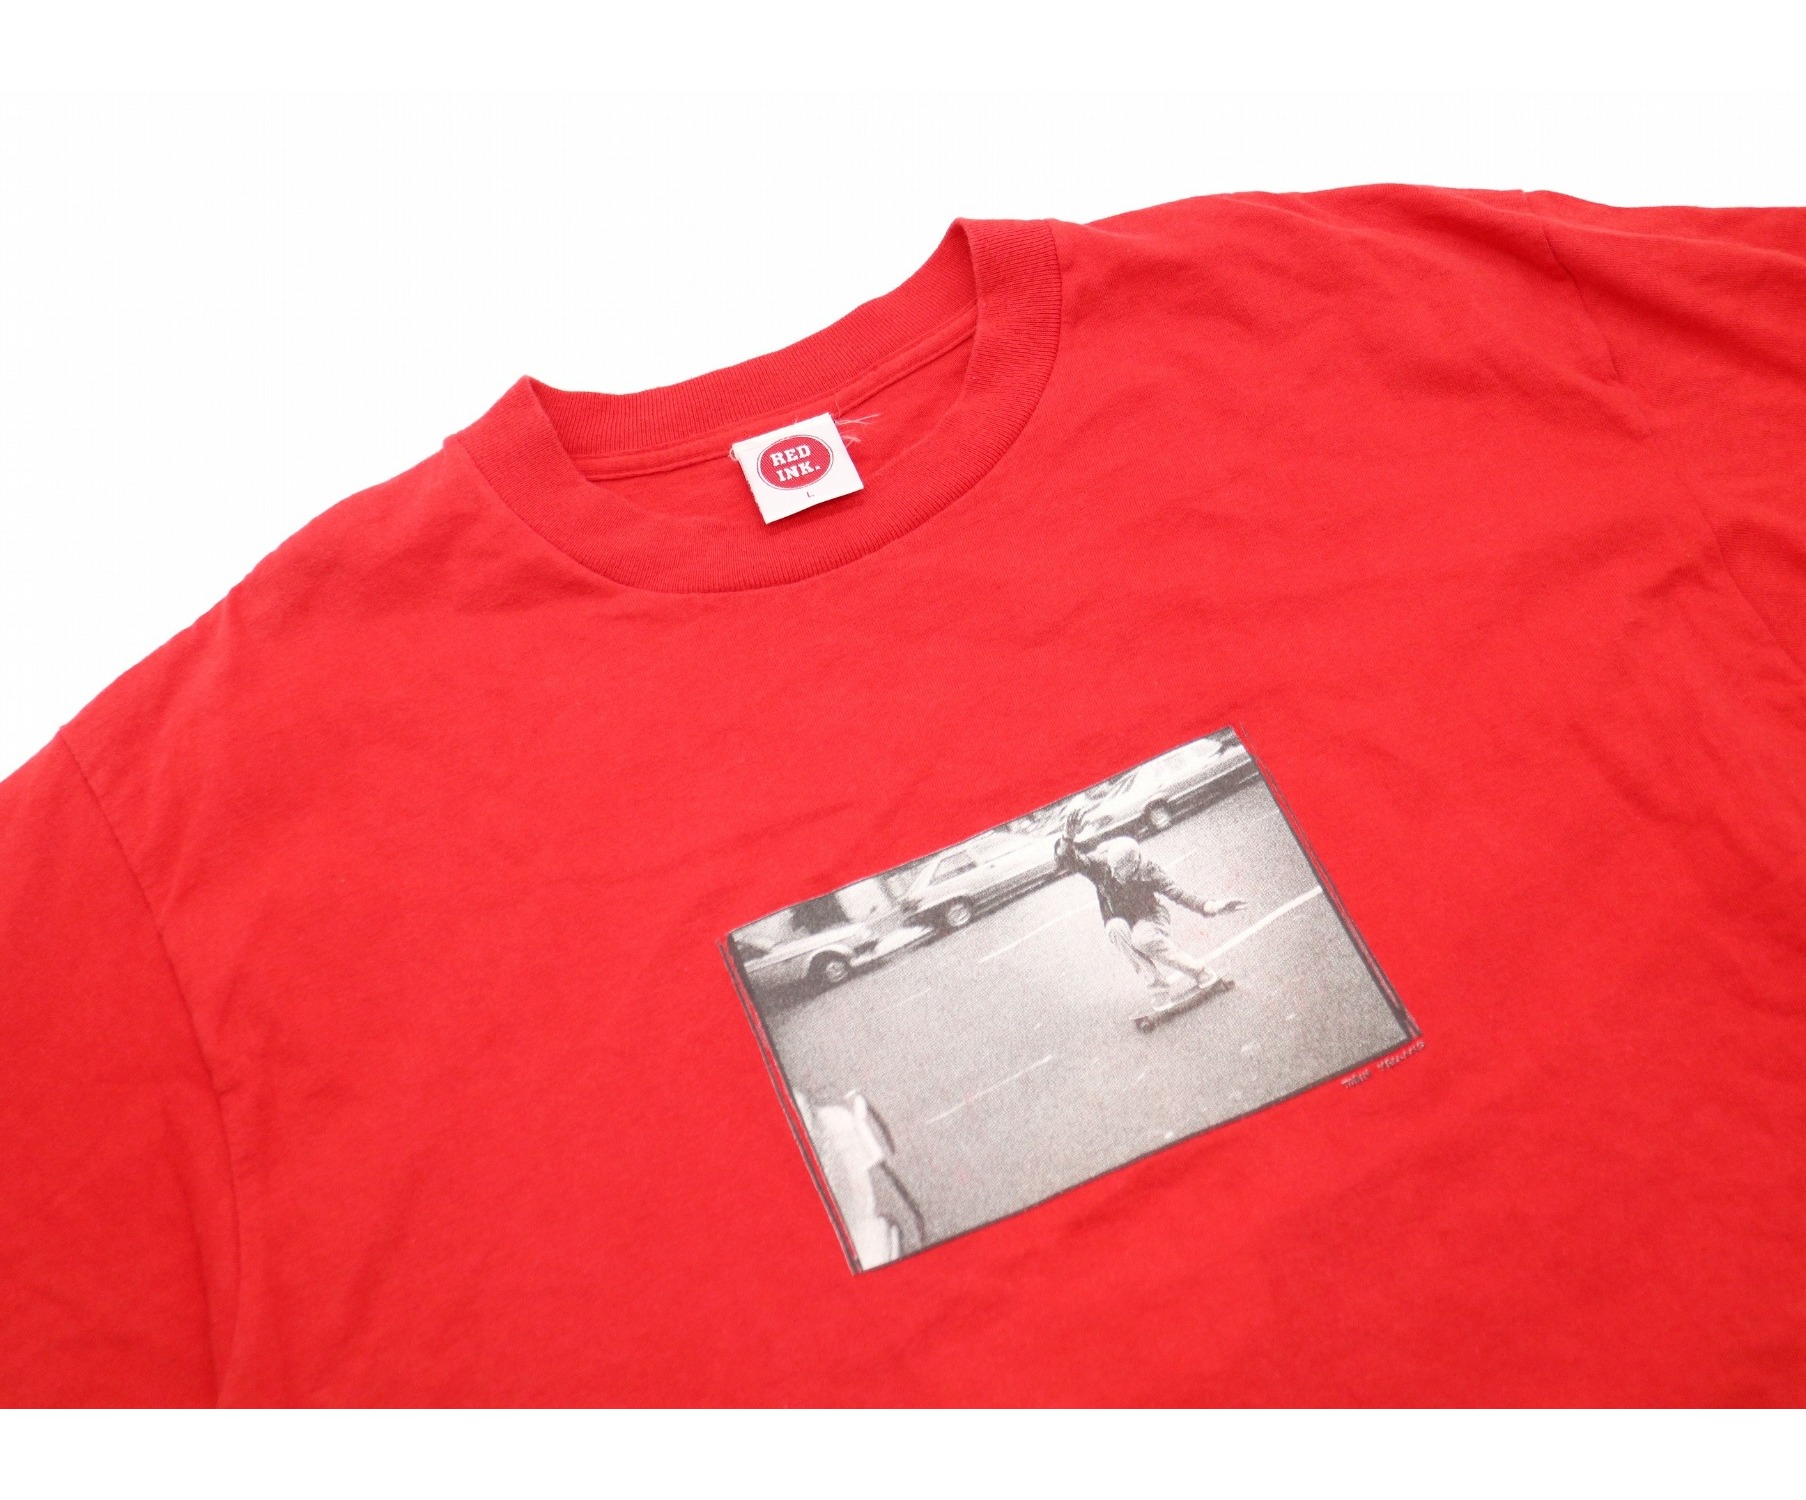 RED INK SKATEBOARD (レッドインクスケートボード) [古着]スケーターフォトプリントTシャツ レッド サイズ:L  オールドスケート・90’s・TOBIN YELLAND